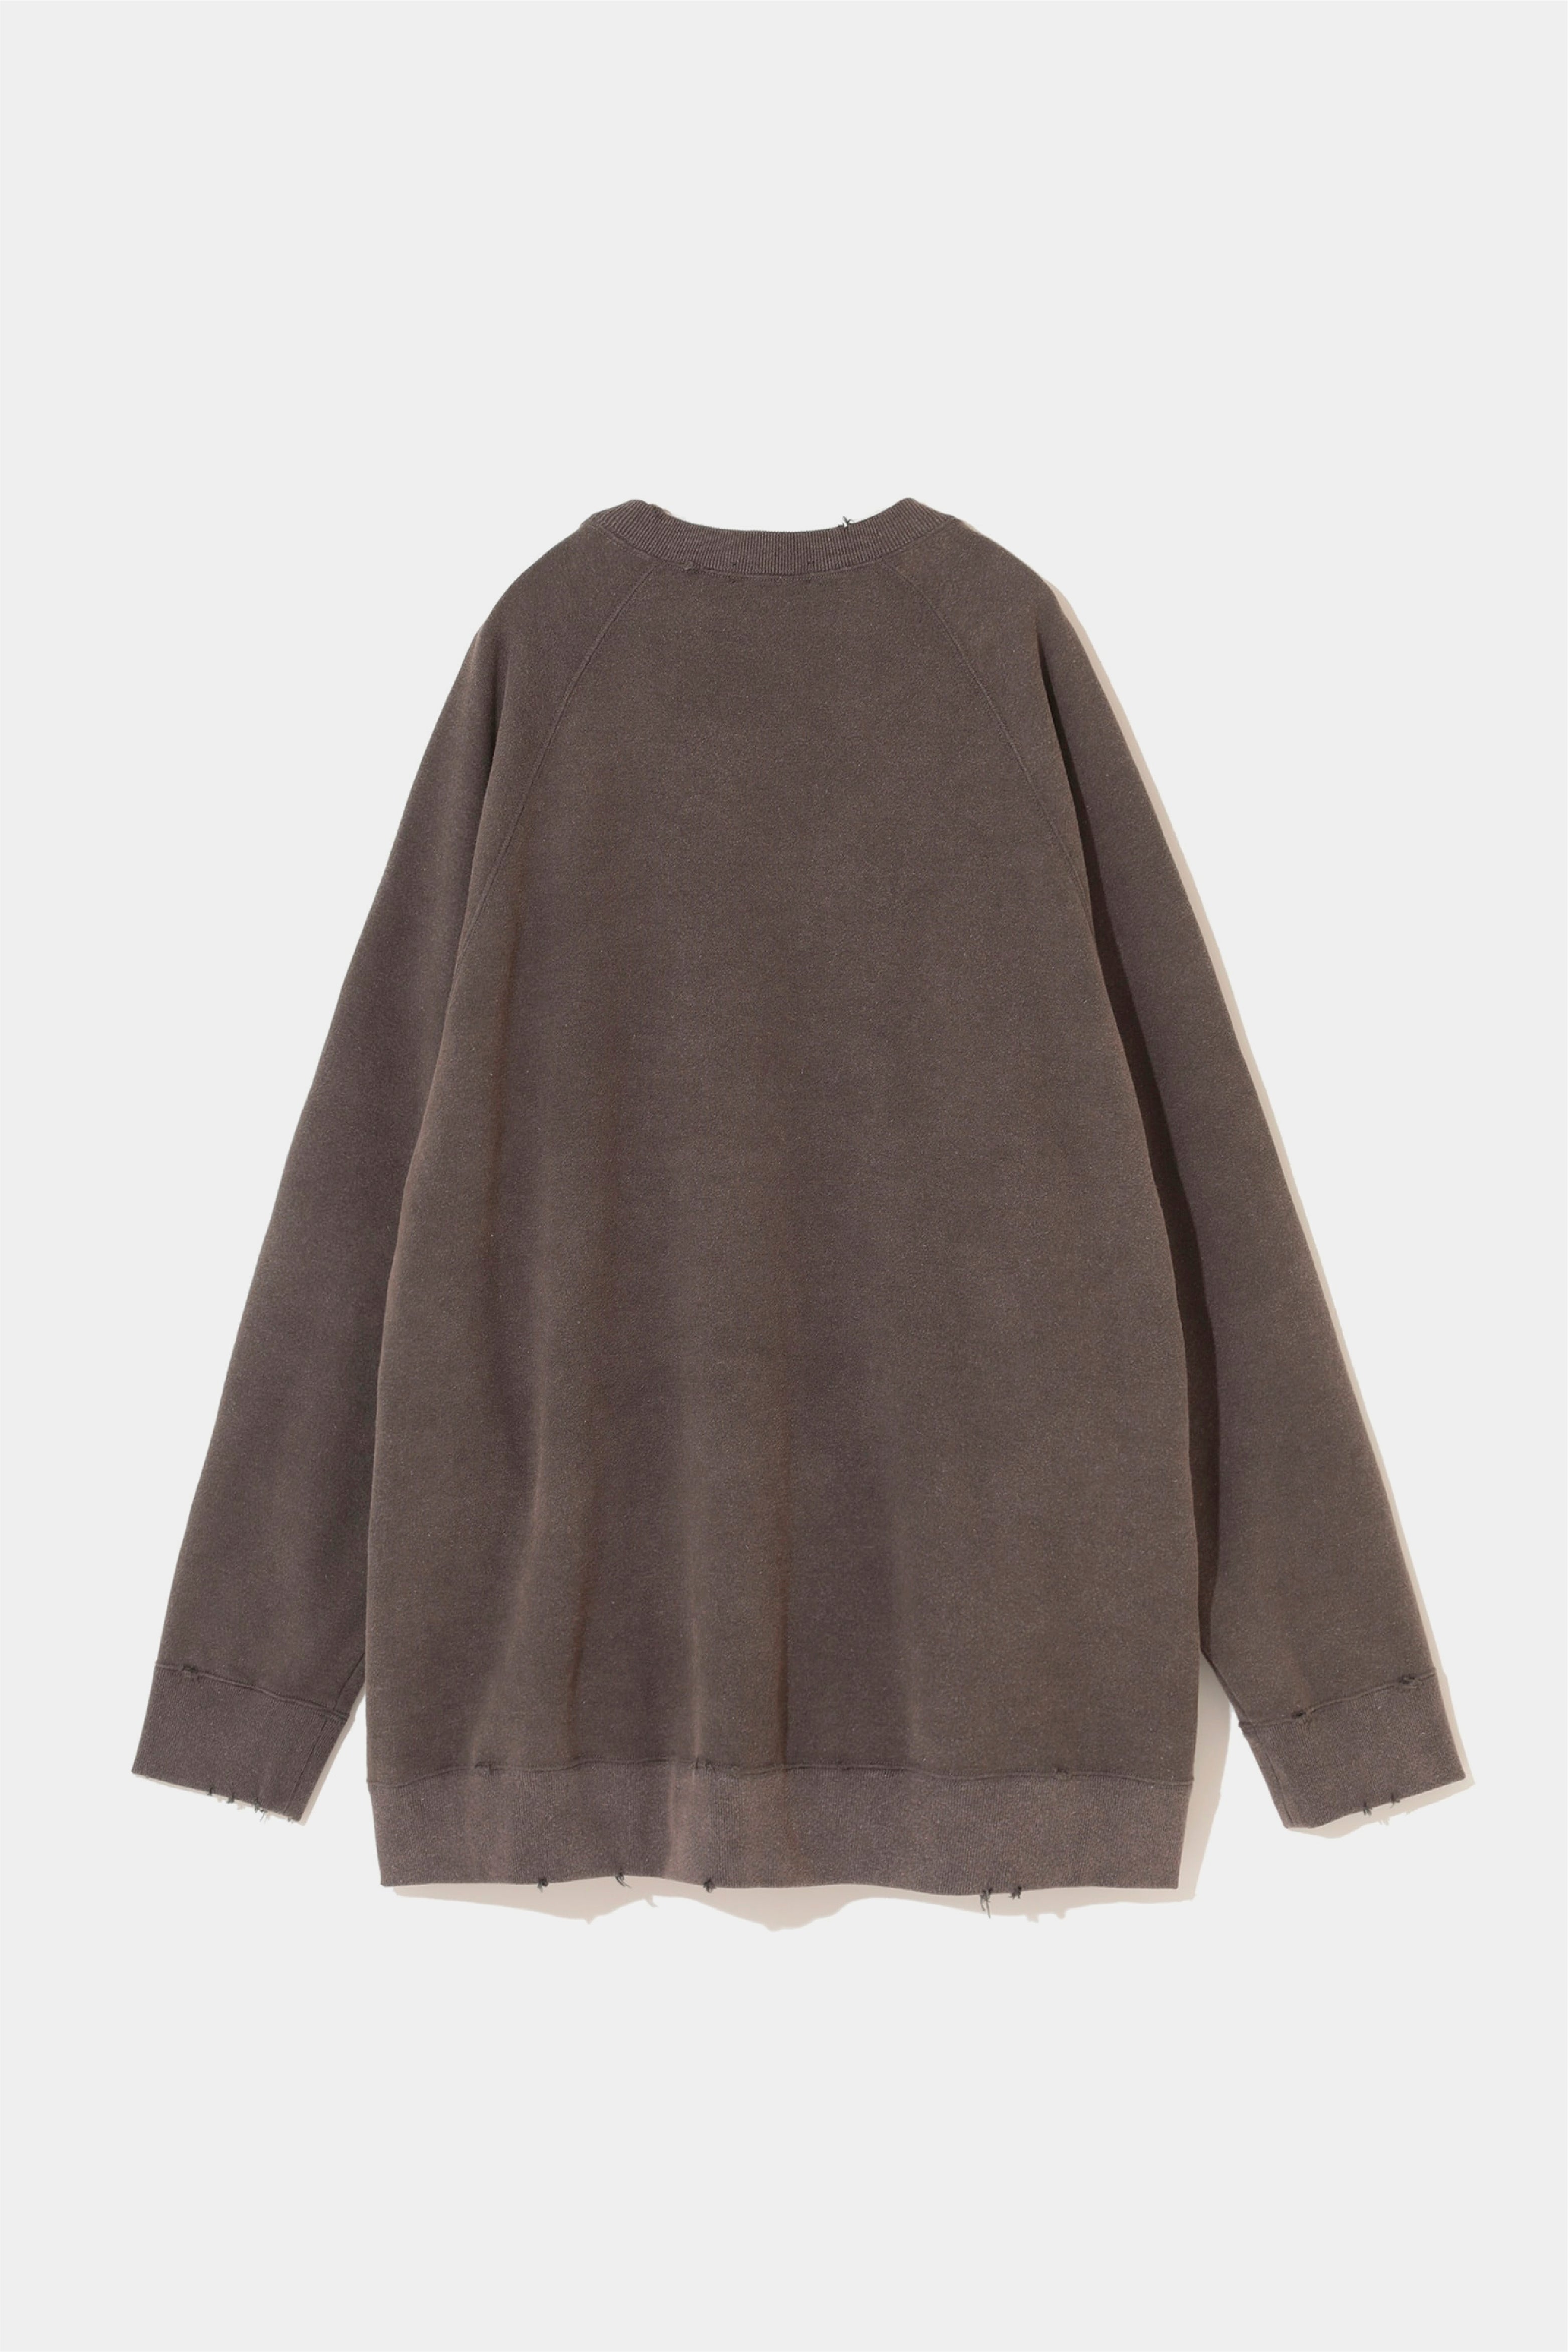 Selectshop FRAME - UNDERCOVER Sweat Shirt Sweats-Knits Concept Store Dubai